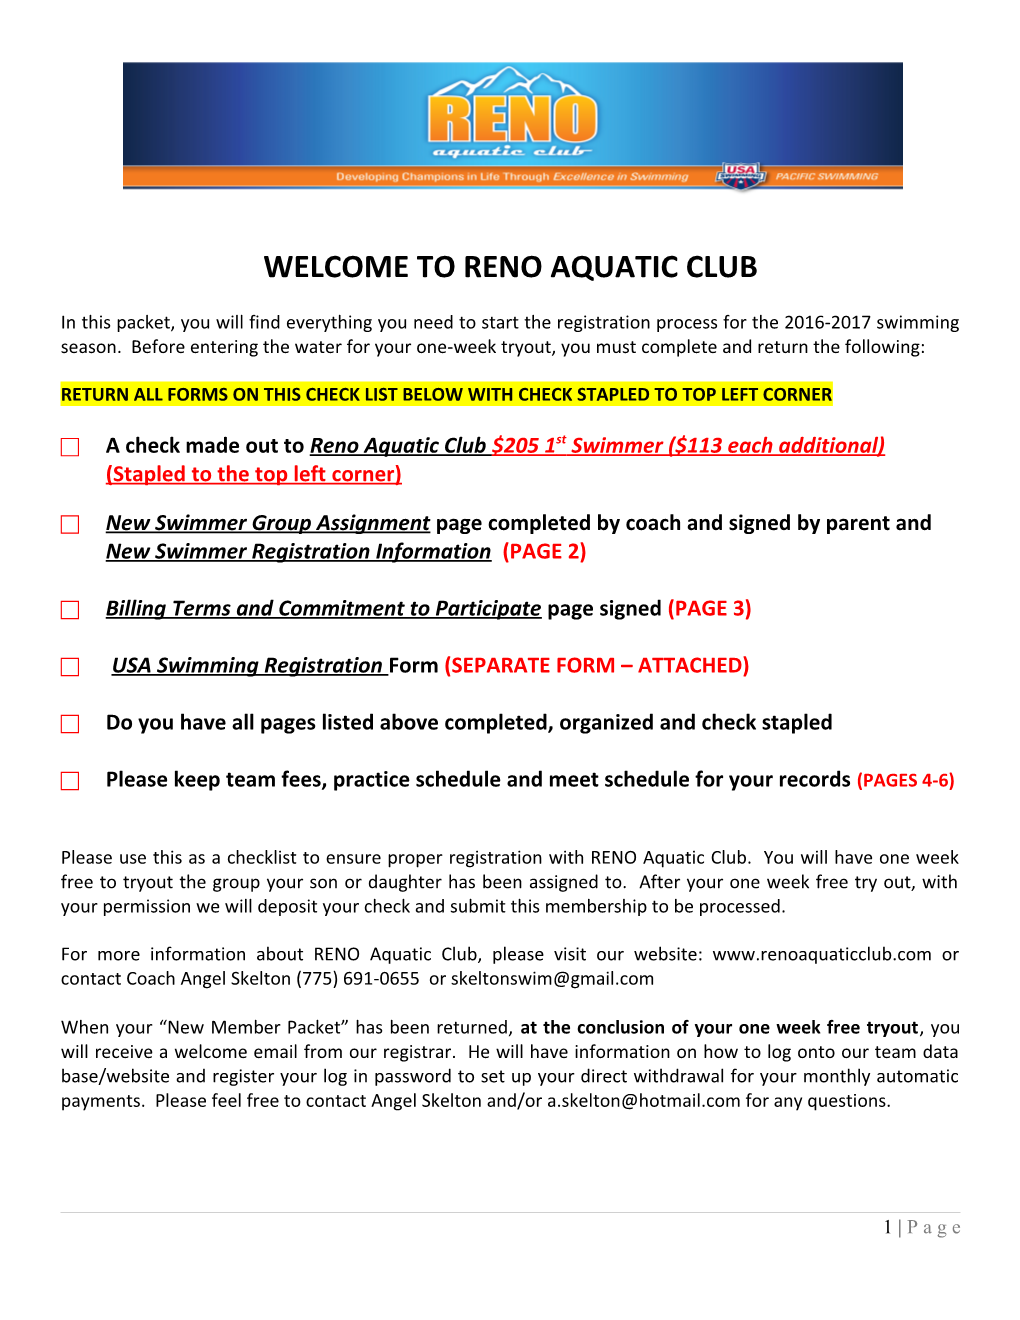 Welcome to Reno Aquatic Club